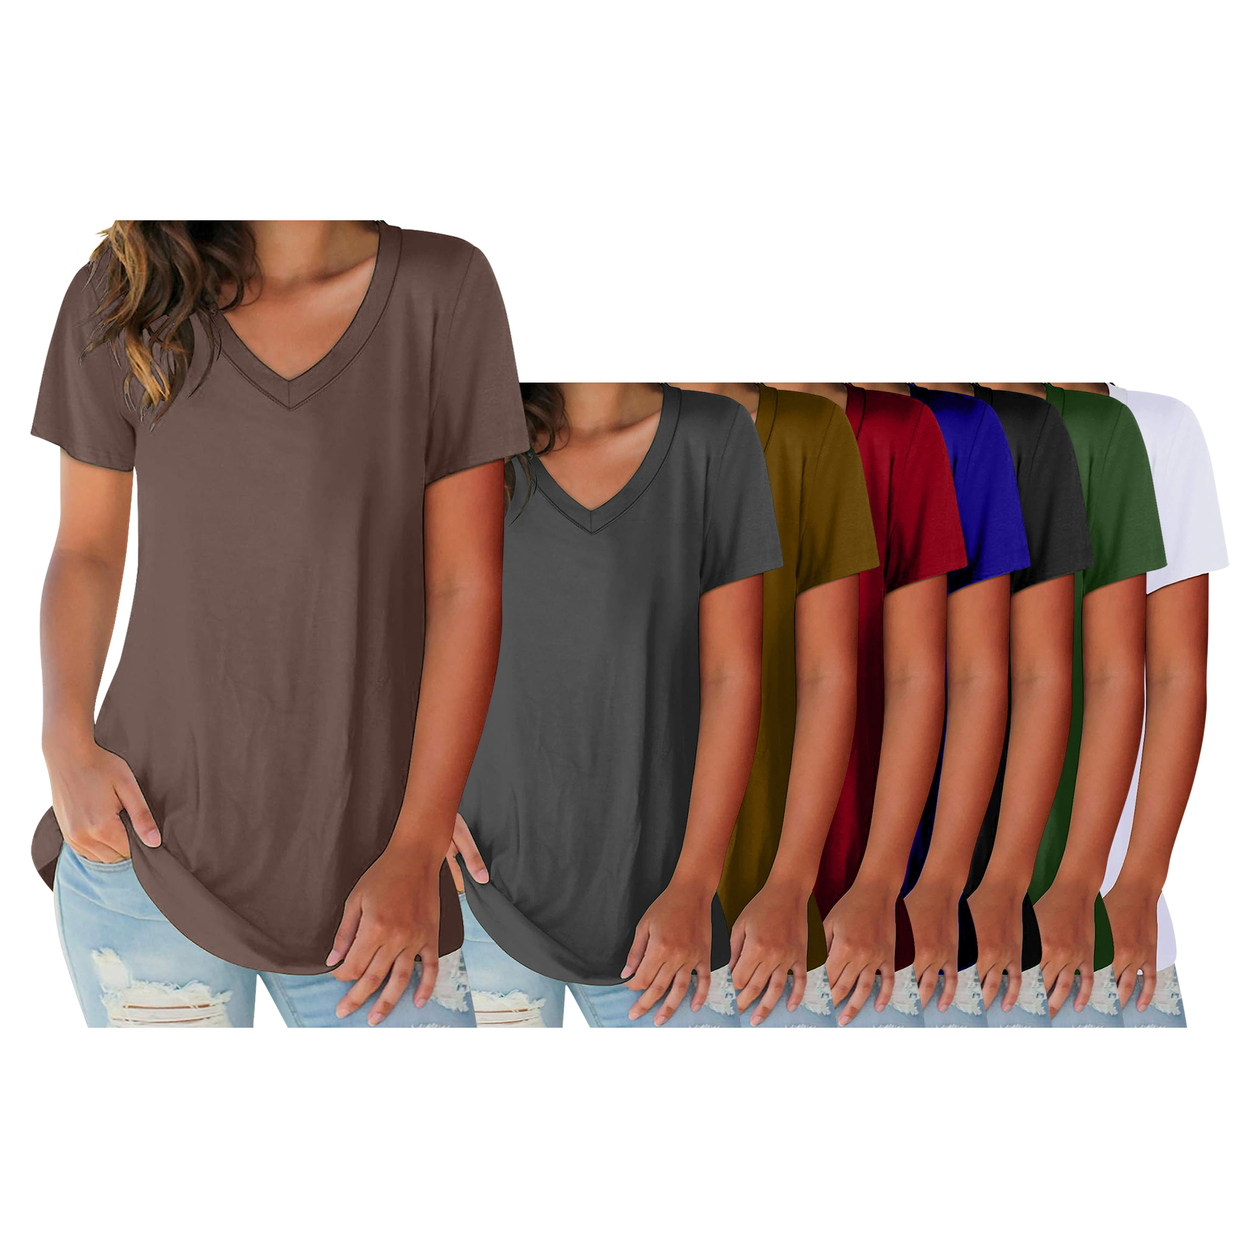 3-Pack: Women's Ultra Soft Smooth Cotton Blend Basic V-Neck Short Sleeve Shirts - Black, White, Green, Small